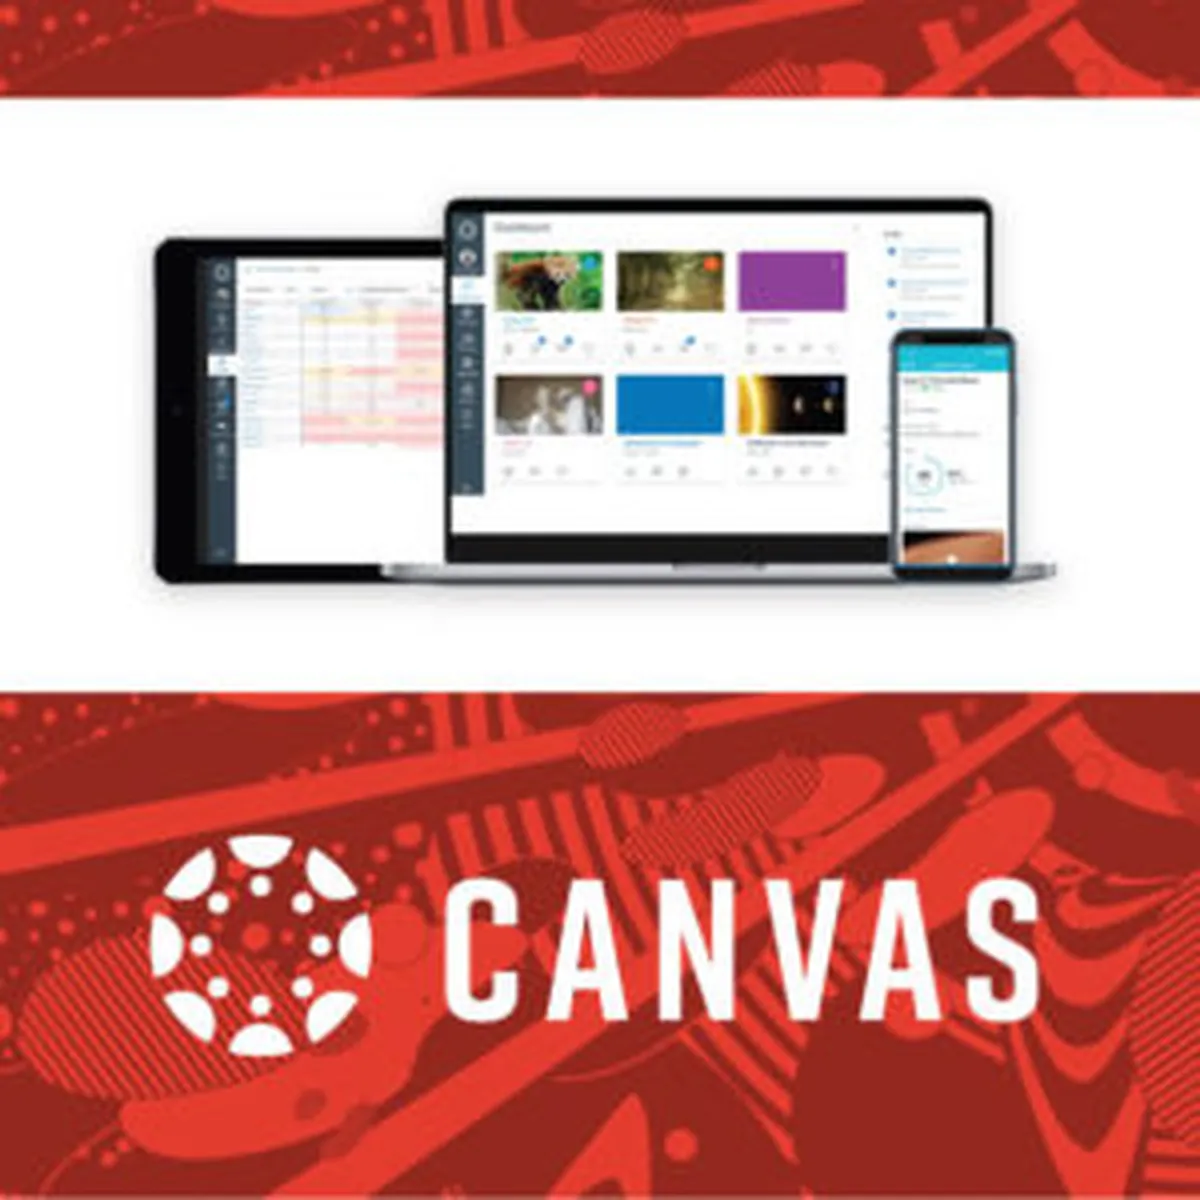 Canvas Review